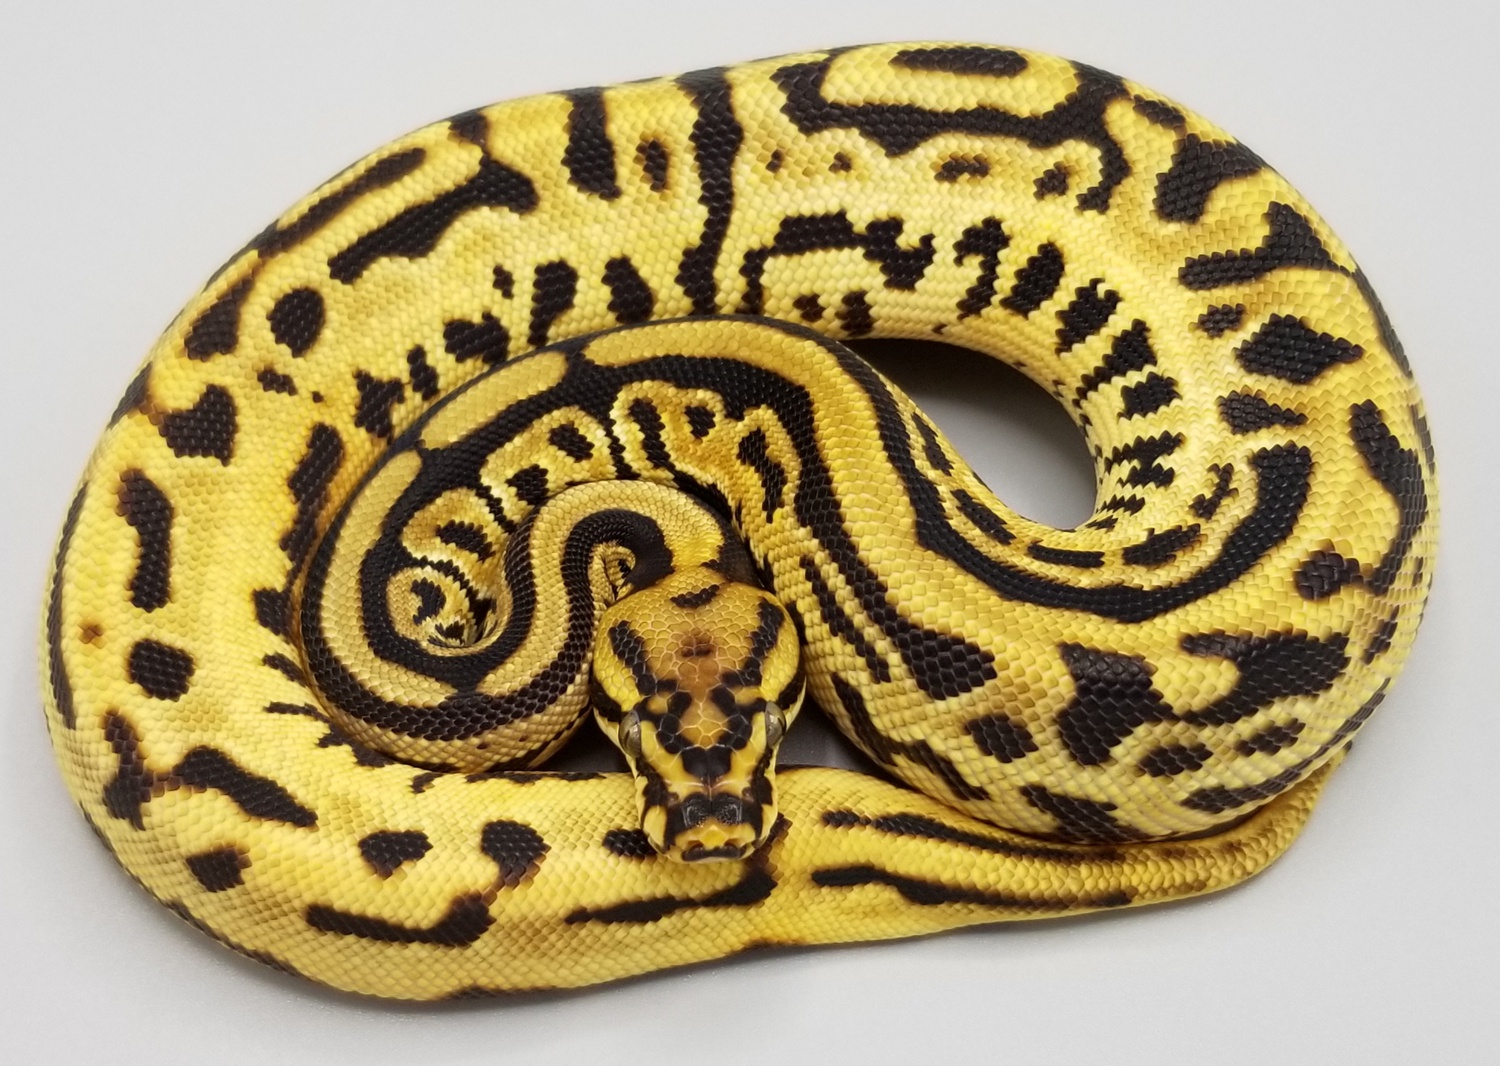 Orange Dream Vanilla Leopard Spotnose Het Daddy Ball Python by Milbradt & Caponetto Pythons